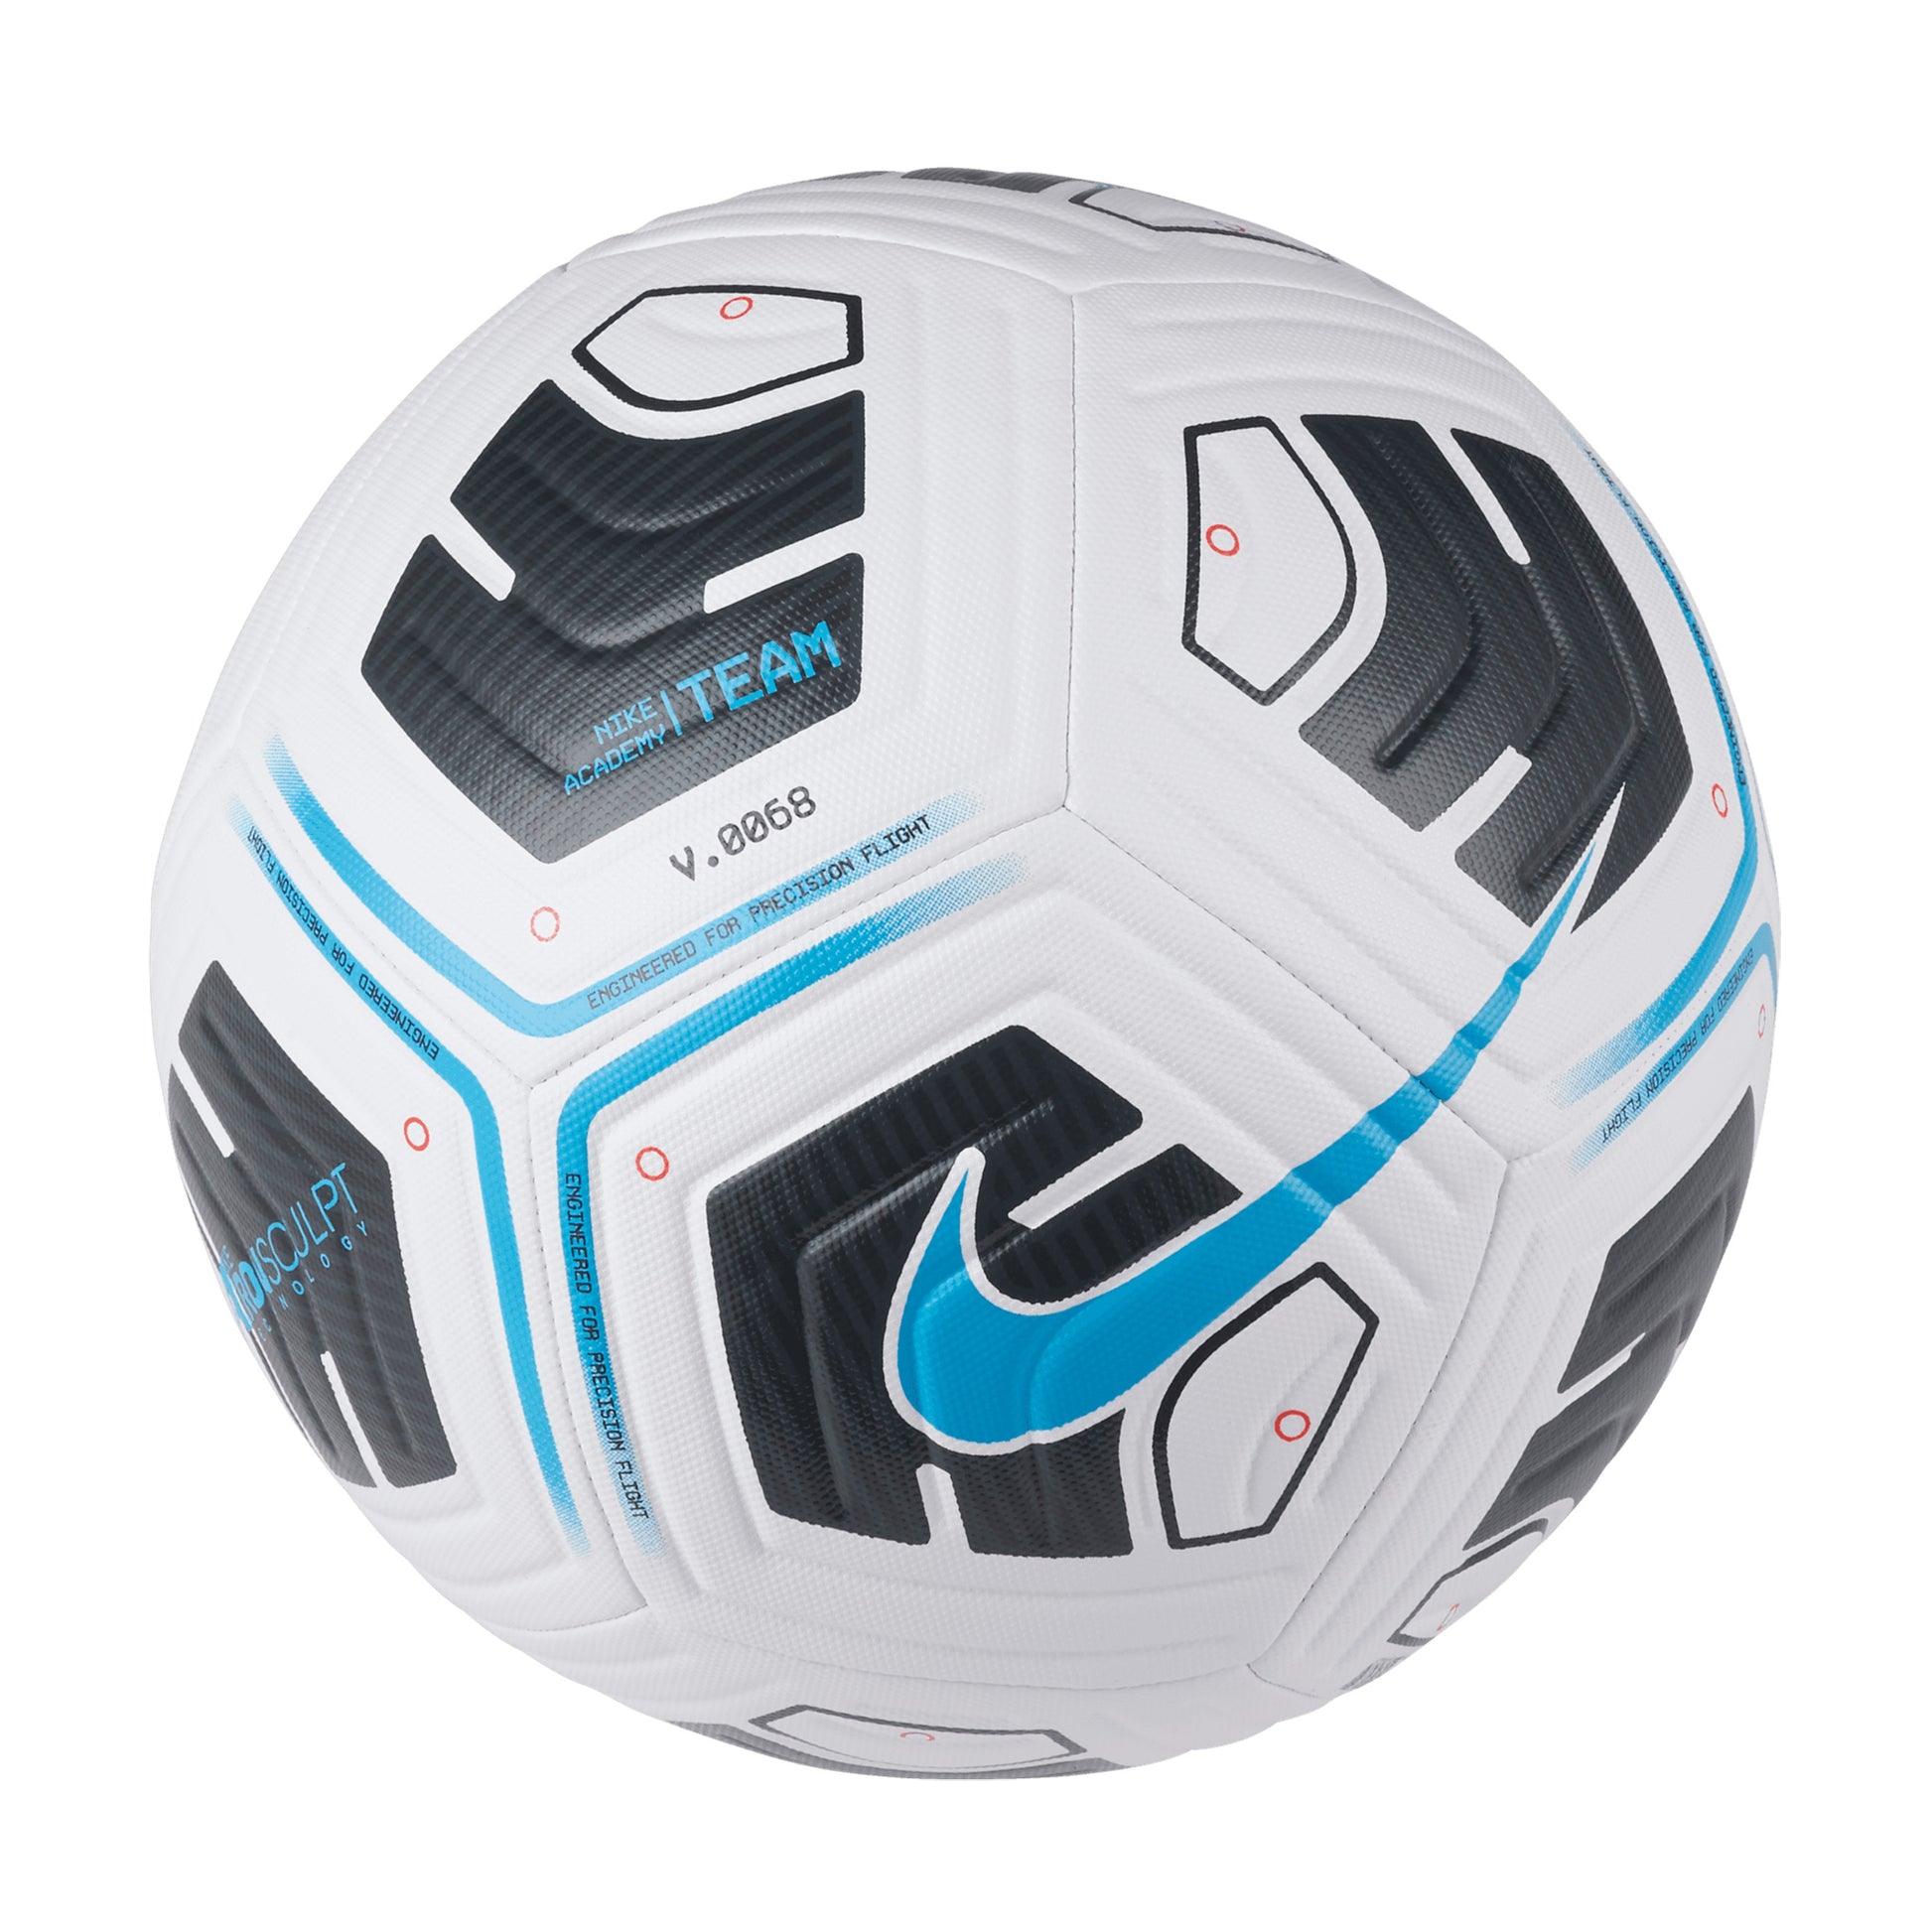 Academy Soccer Ball | EvangelistaSports.com | Canada's Premiere Soccer Store